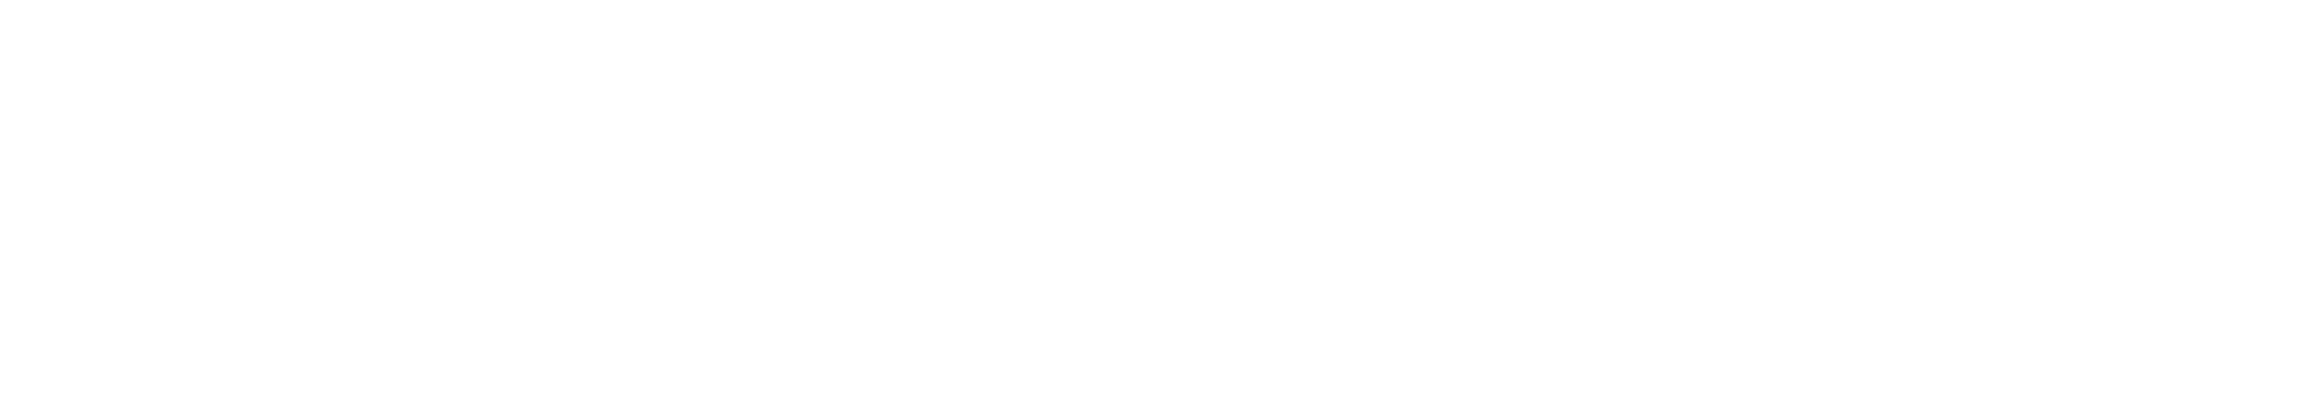 Harbor Group Management logo for Cedargate Apartments